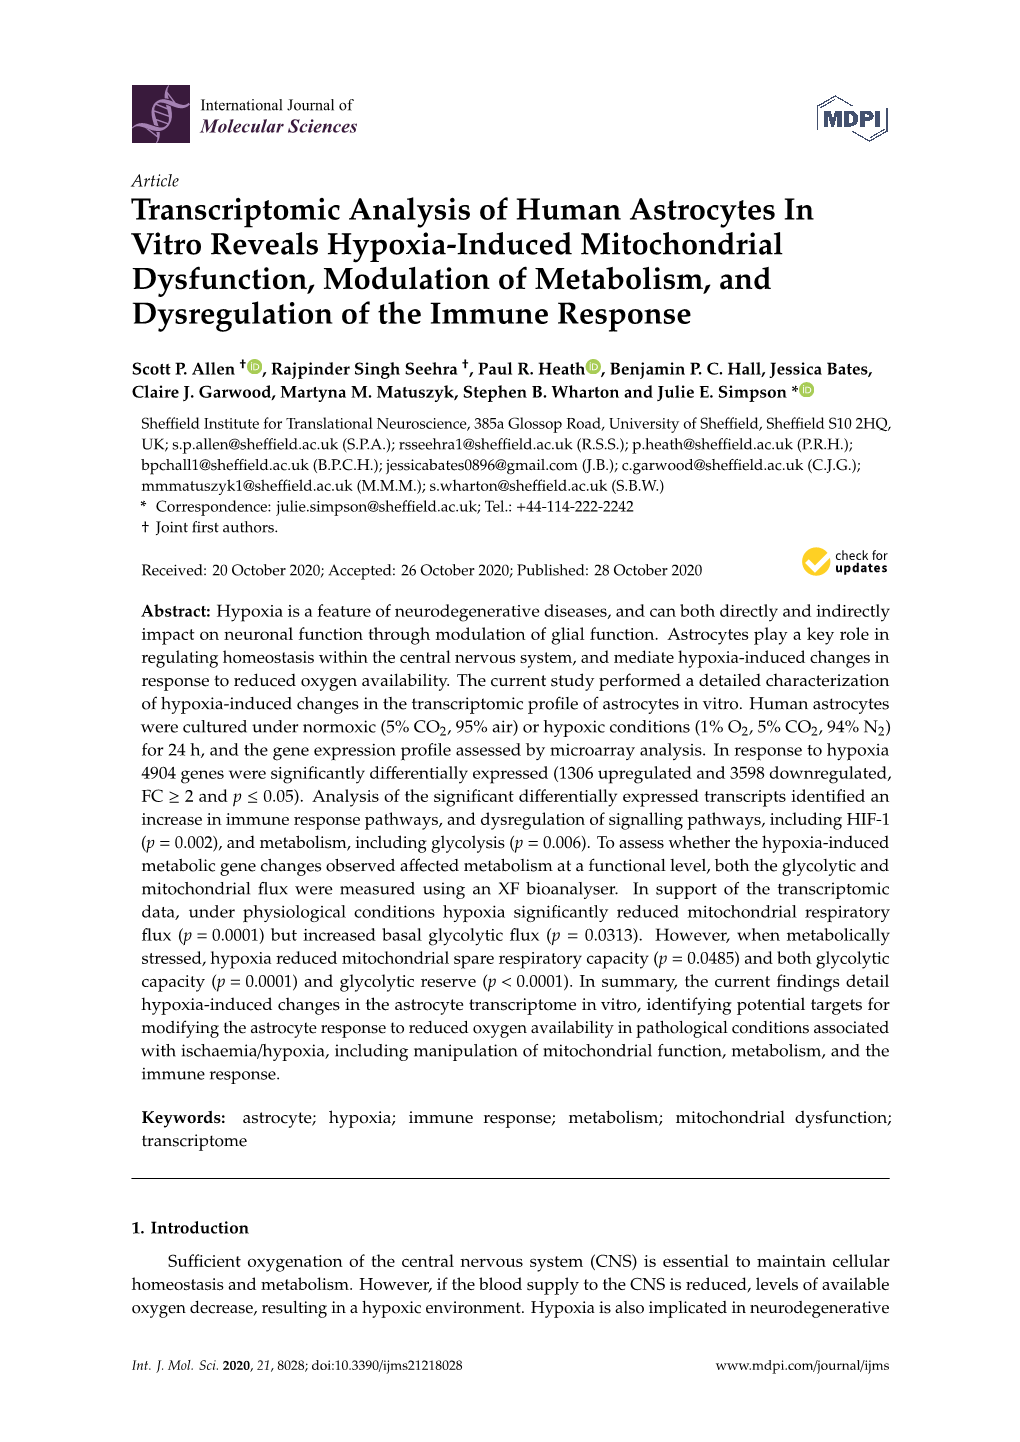 Transcriptomic Analysis of Human Astrocytes in Vitro Reveals Hypoxia